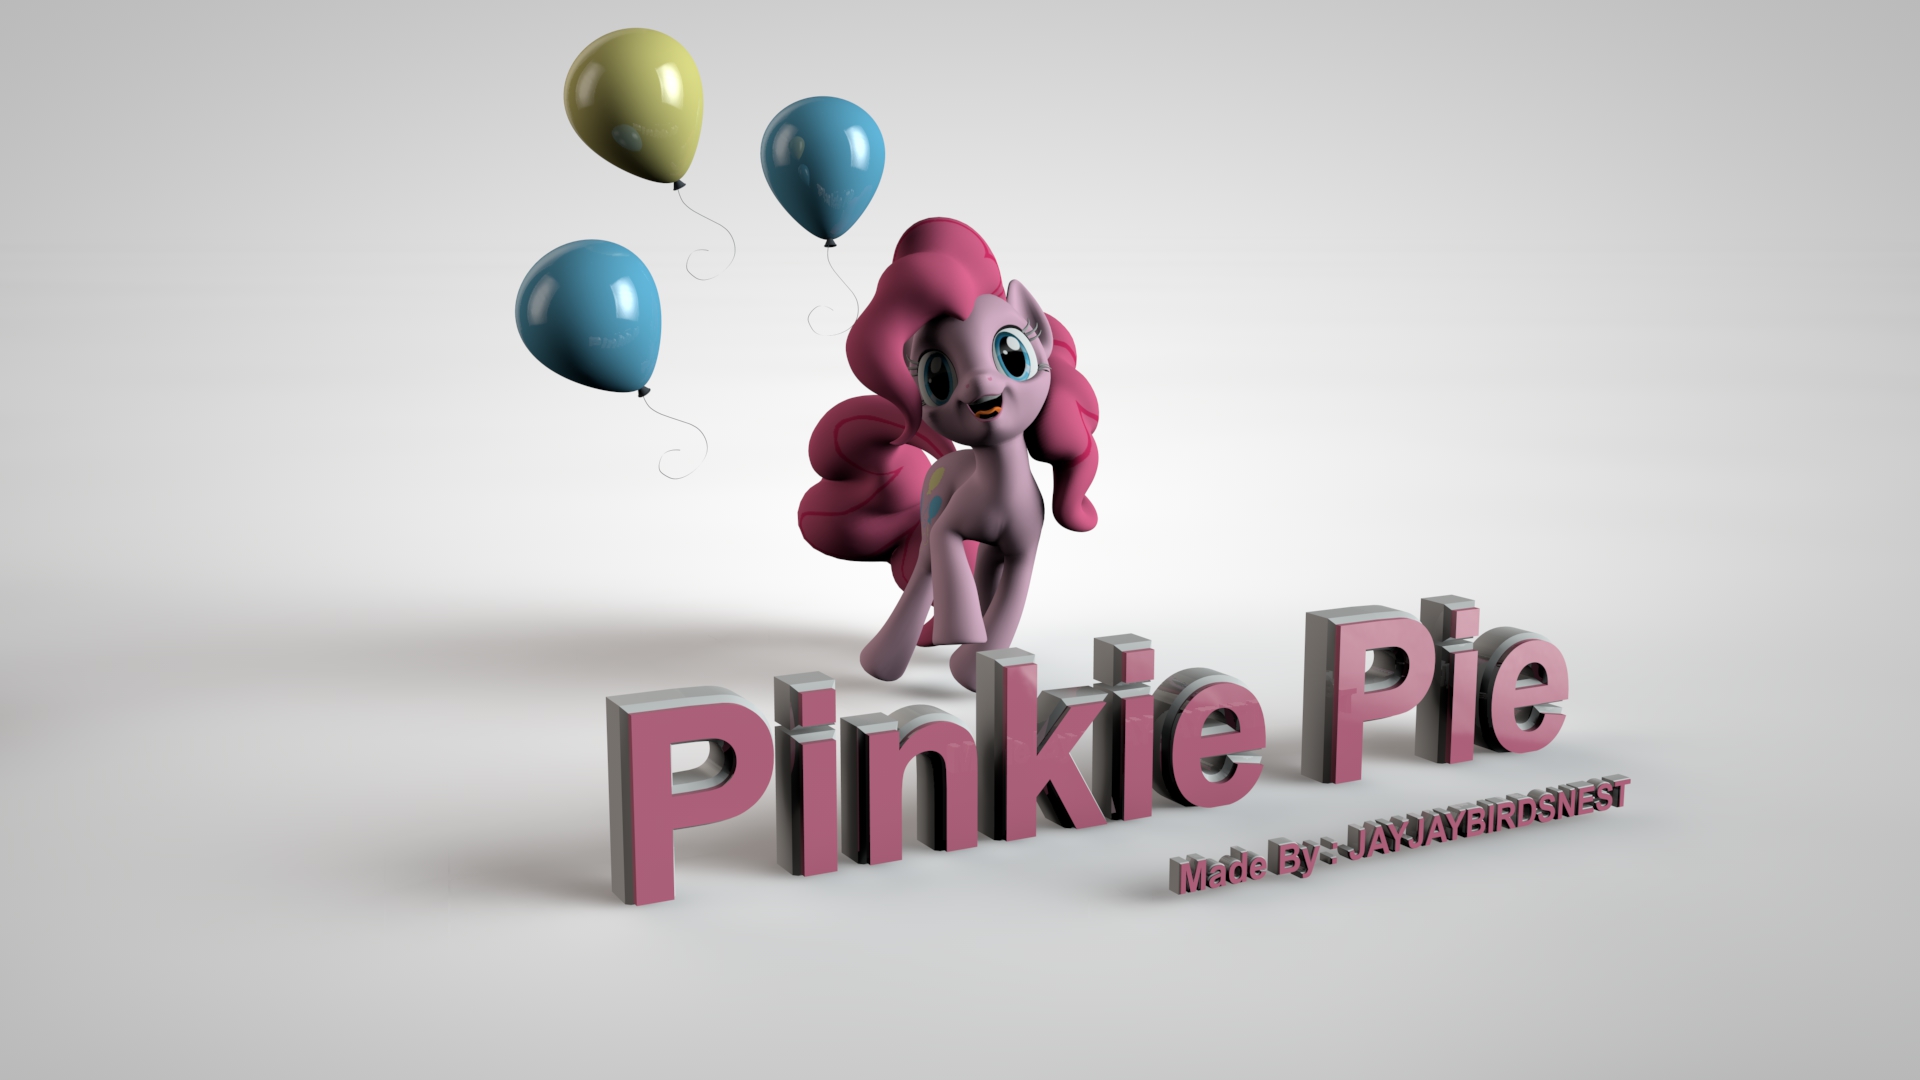 3D My Little Pony FIM Pinkie Pie Wallpaper by jayjaybirdsnest and KP-ShadowSquirrel